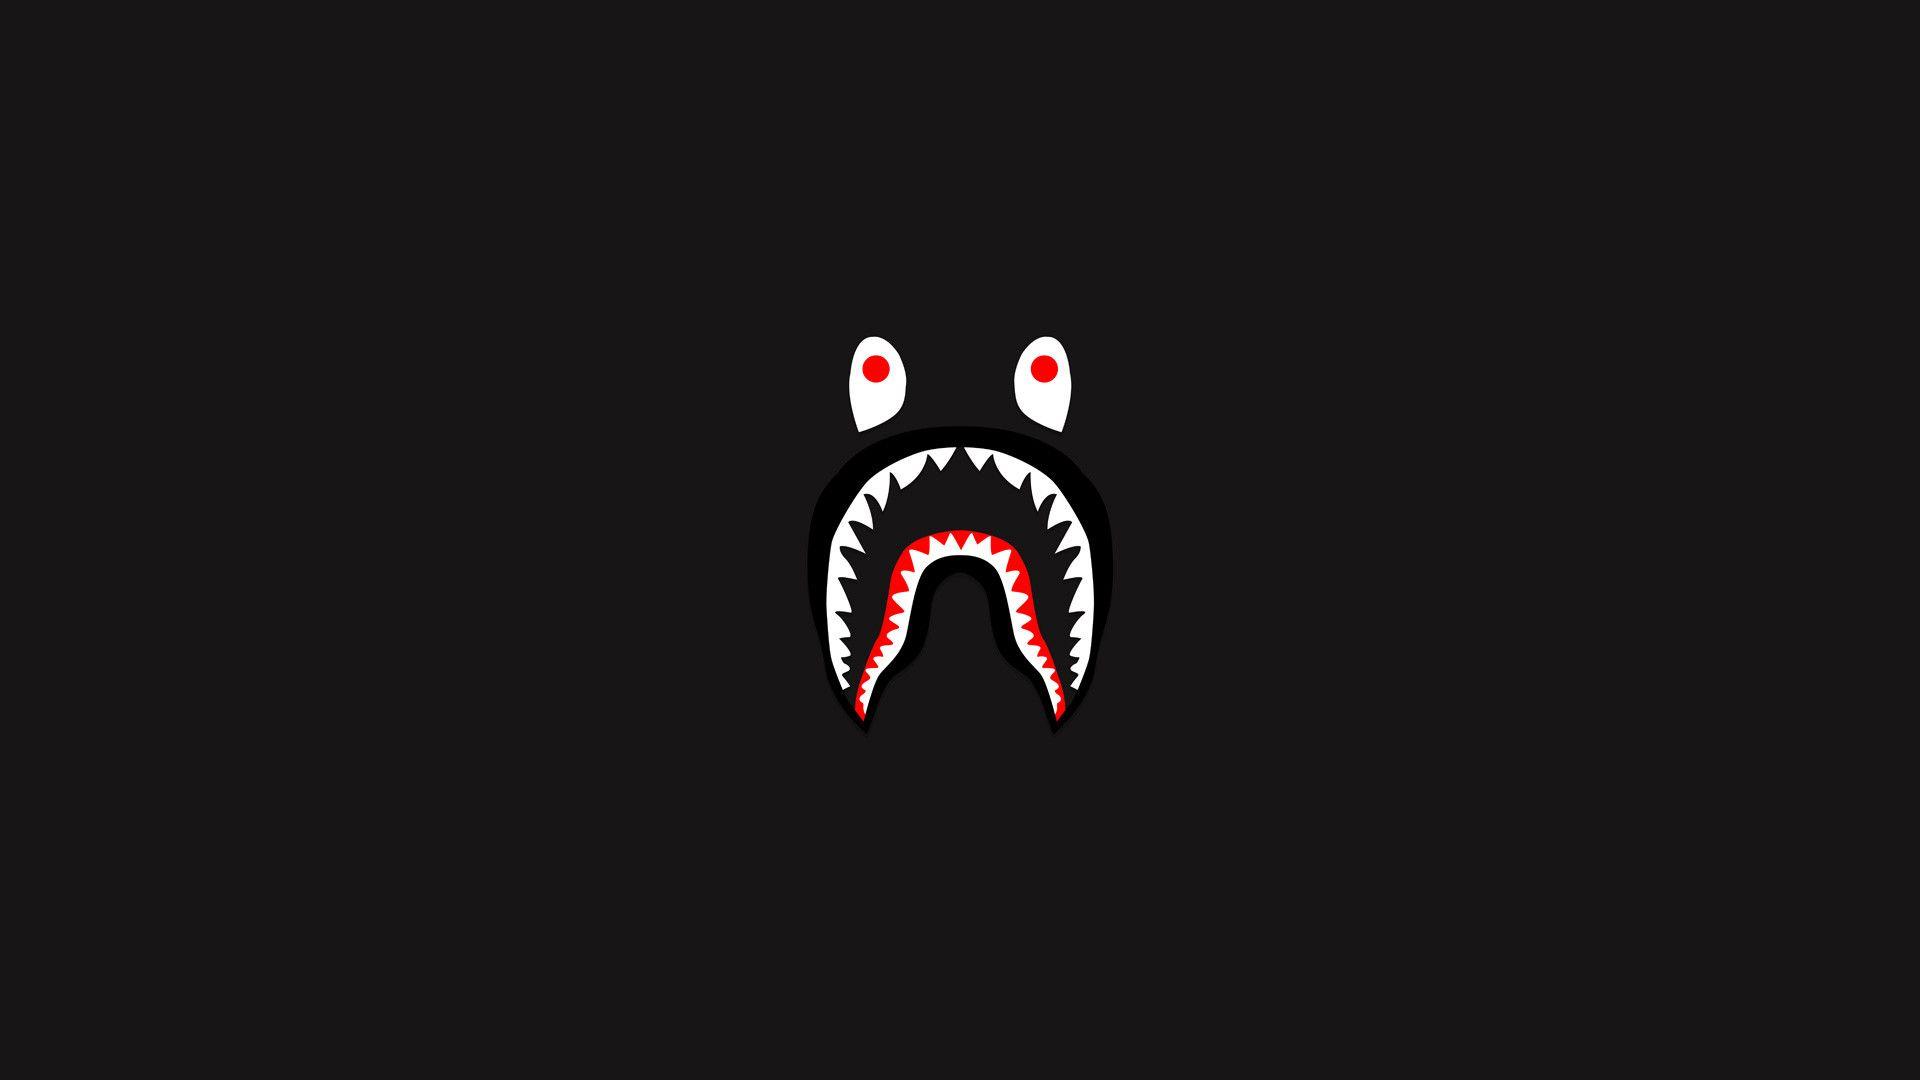 Supreme BAPE Shark Wallpapers - Top Hình Ảnh Đẹp